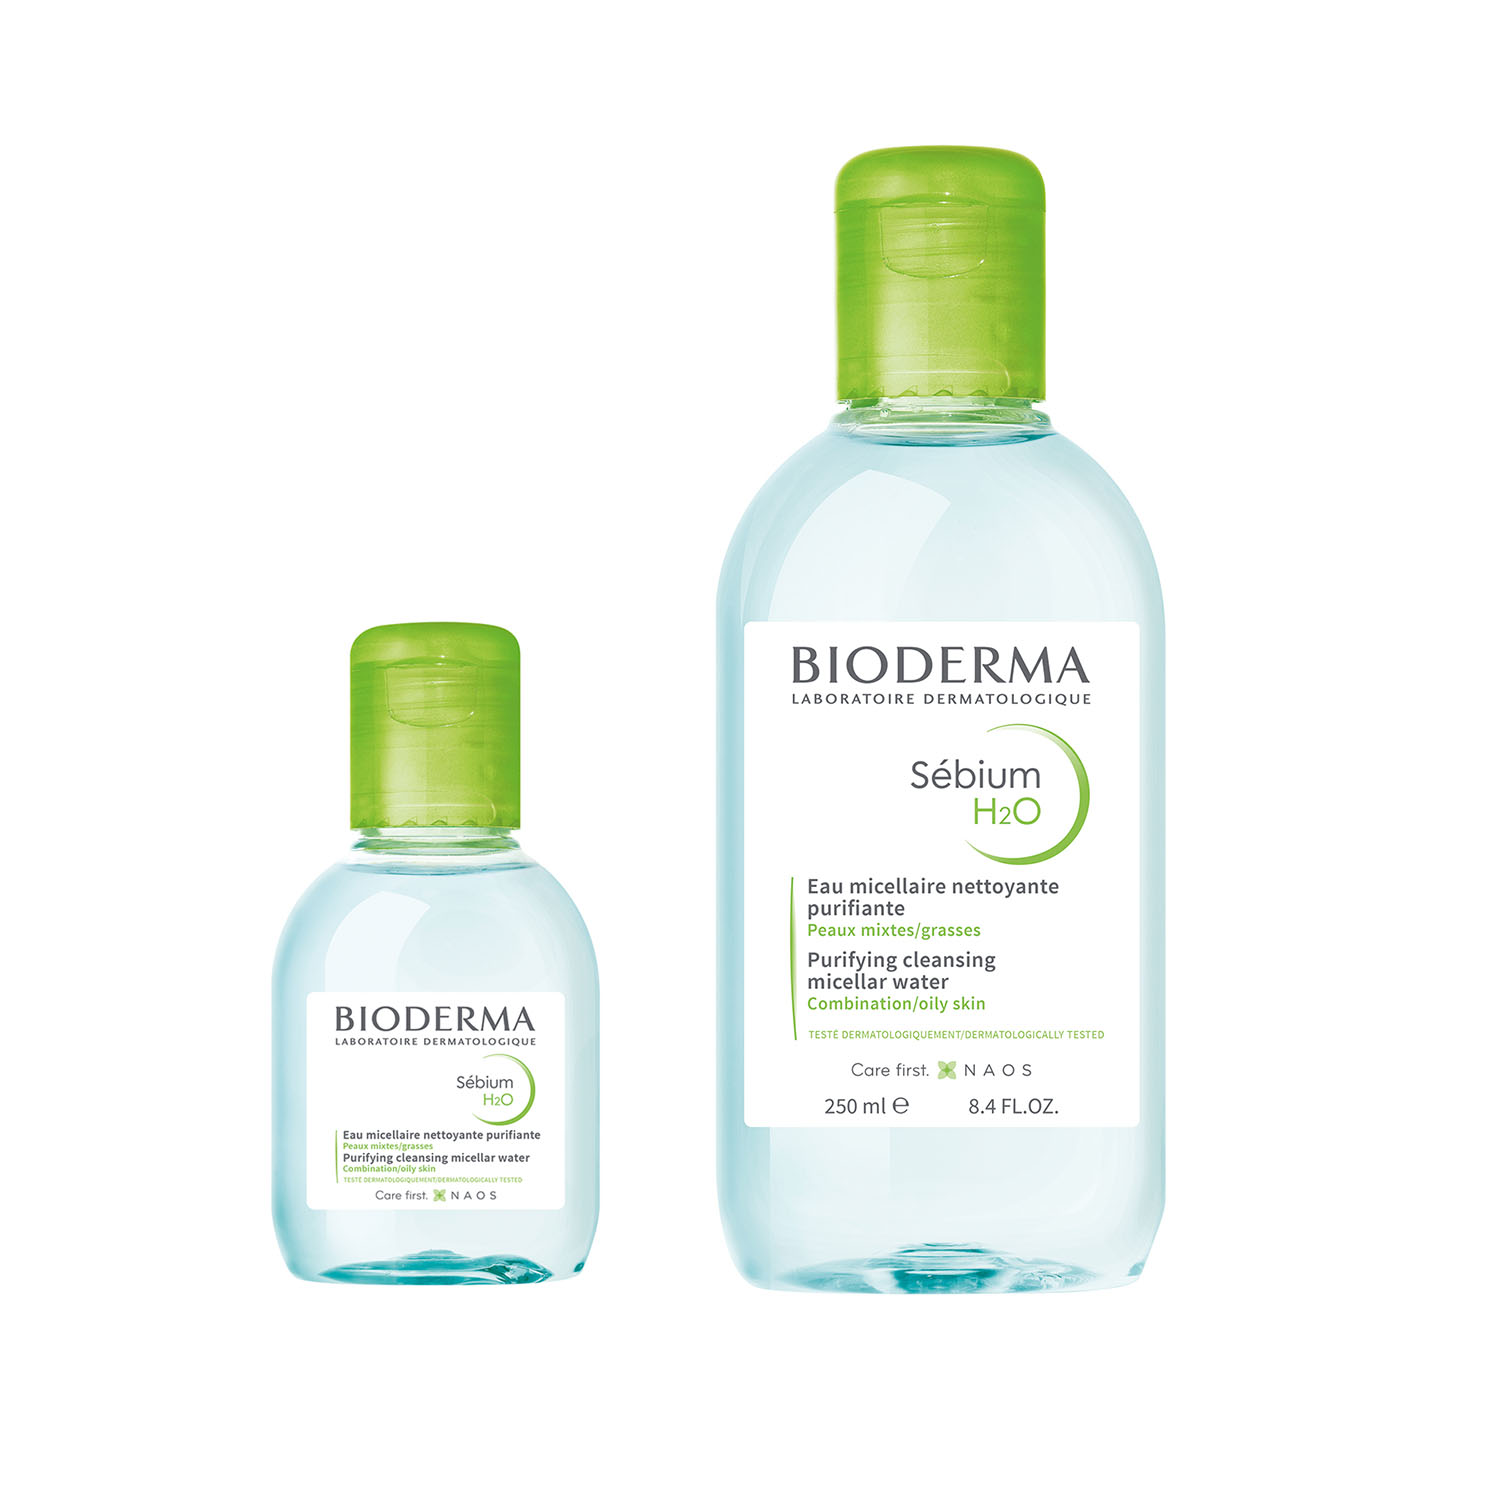 Bioderma - Sébium Foaming Gel - Limpiador facial y corporal - Limpiador  desmaquillante - Limpiador facial para pieles mixtas a grasas